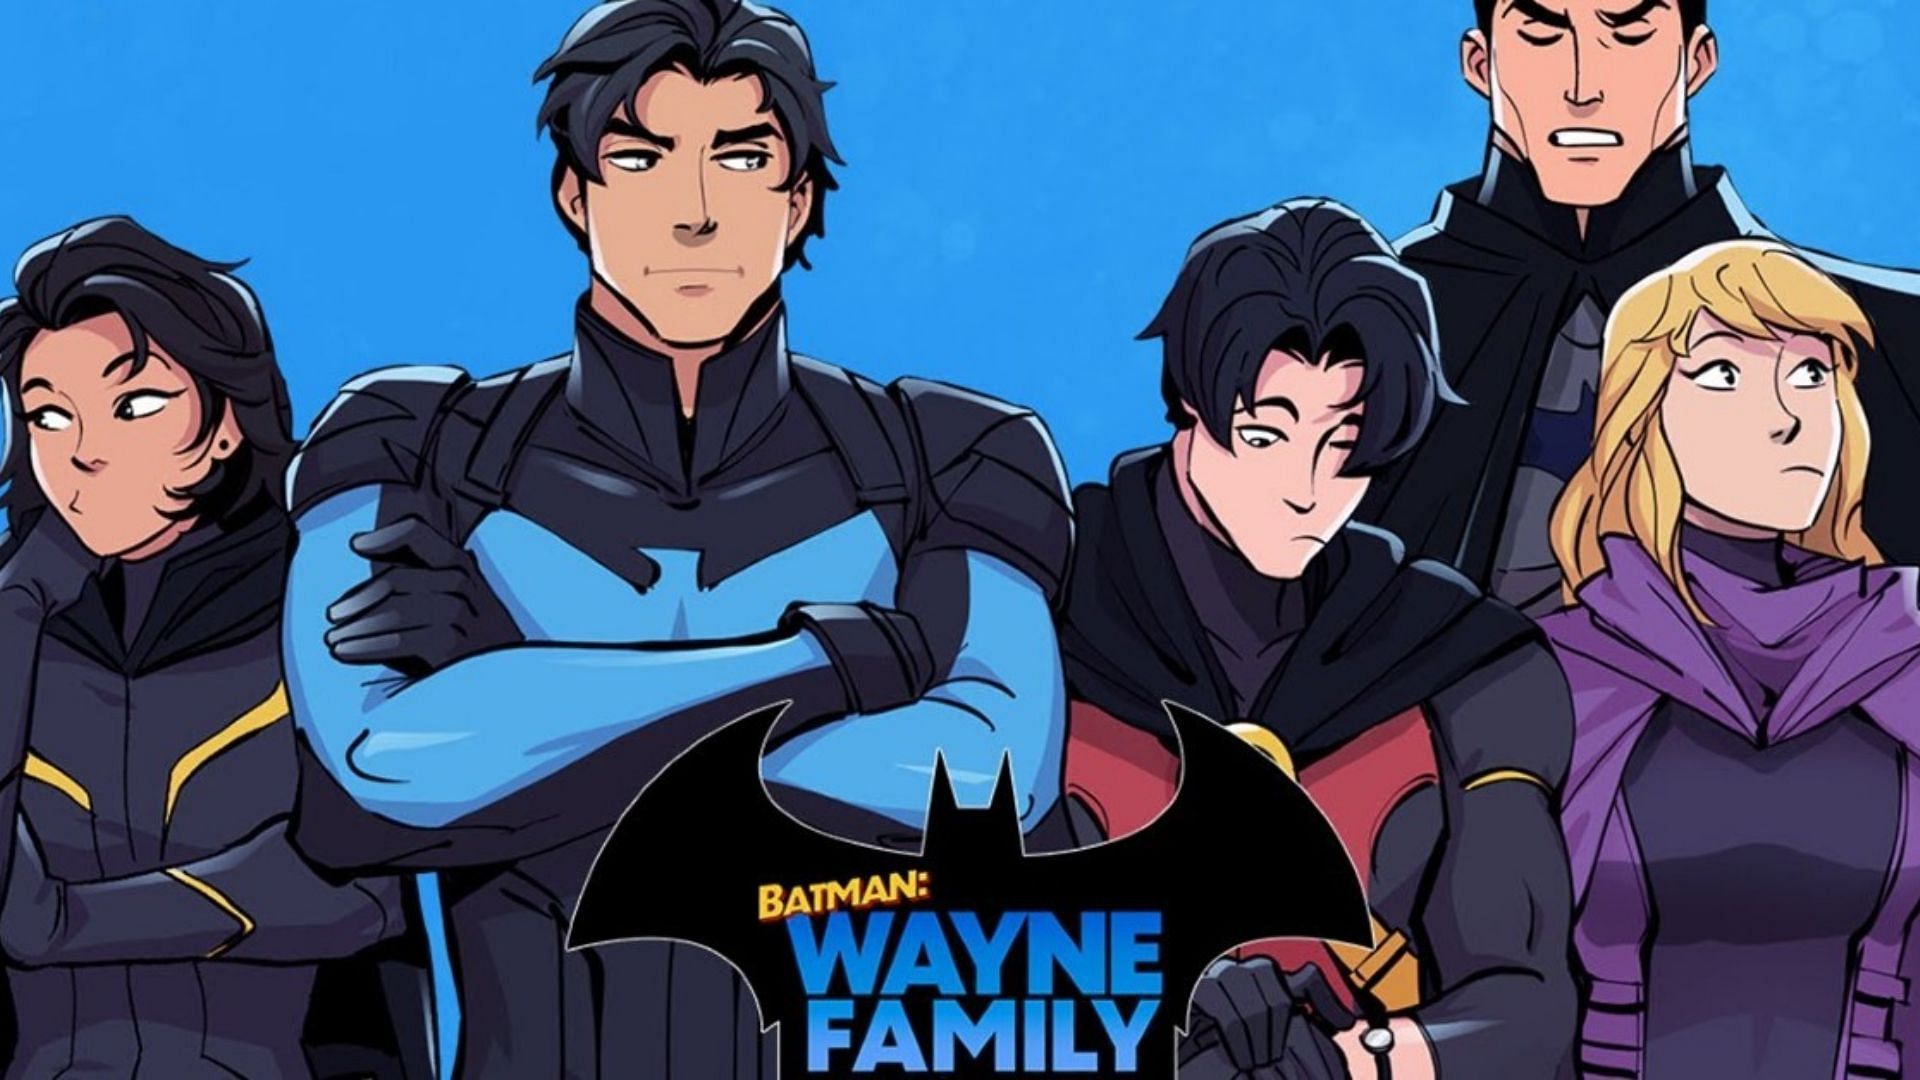 Batman: Wayne family adventures (Image via Webtoon/DC Comics)